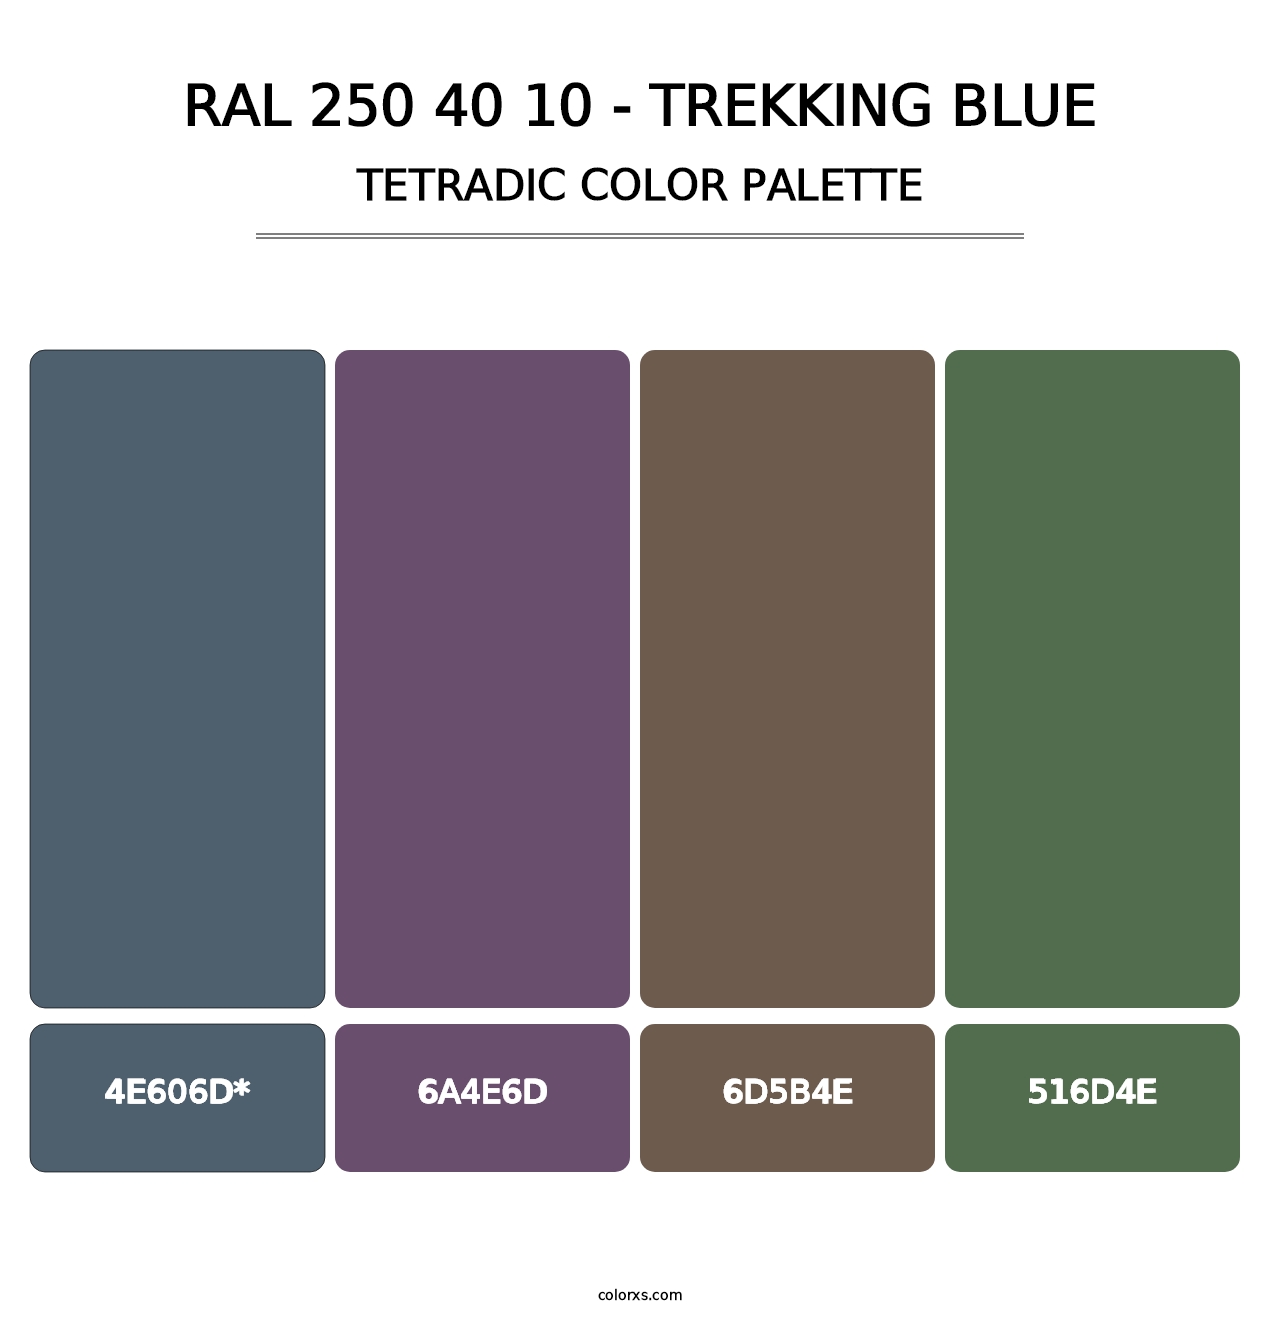 RAL 250 40 10 - Trekking Blue - Tetradic Color Palette